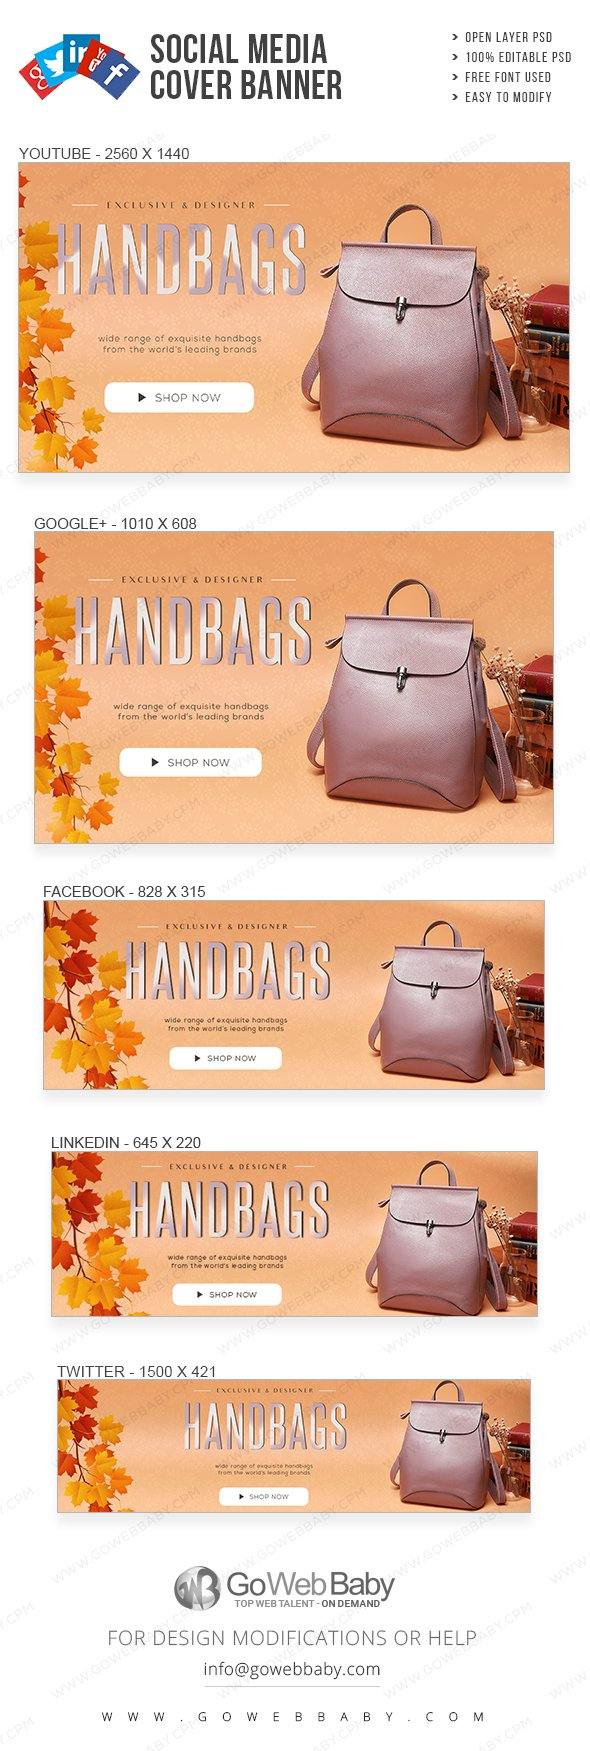 Social Media Cover Banner - Designer Handbags For Website Marketing - GoWebBaby.Com